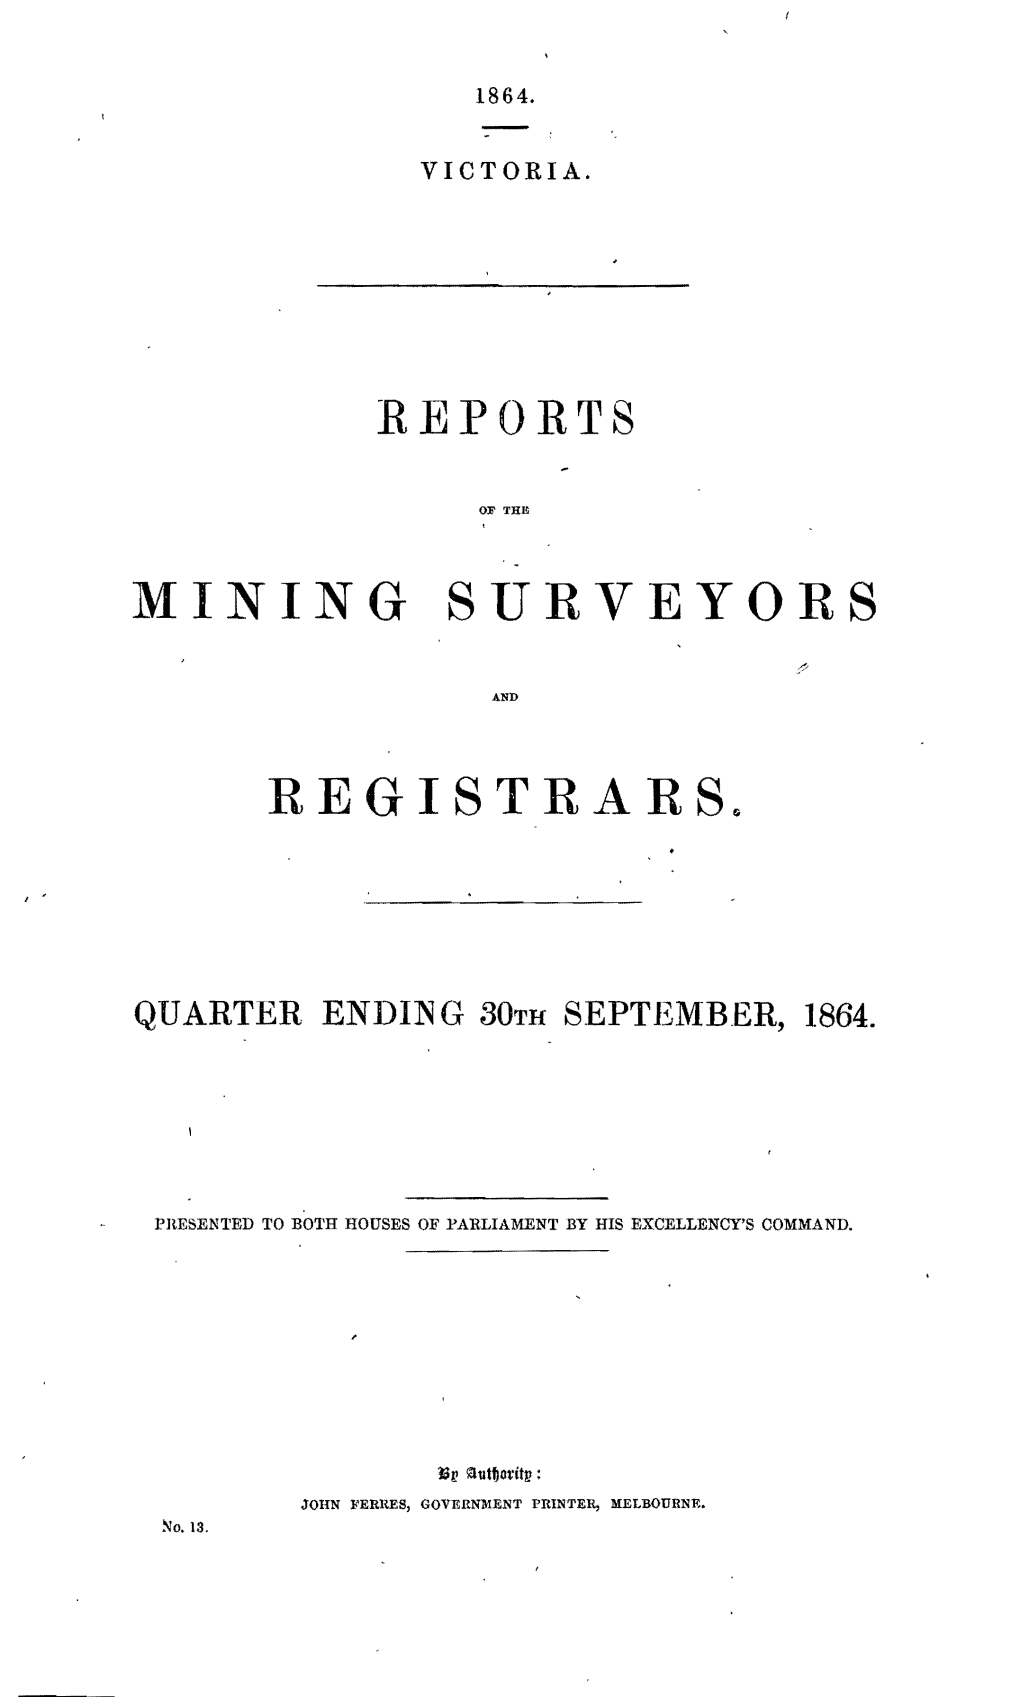 Mining Surveyors Registrarsq